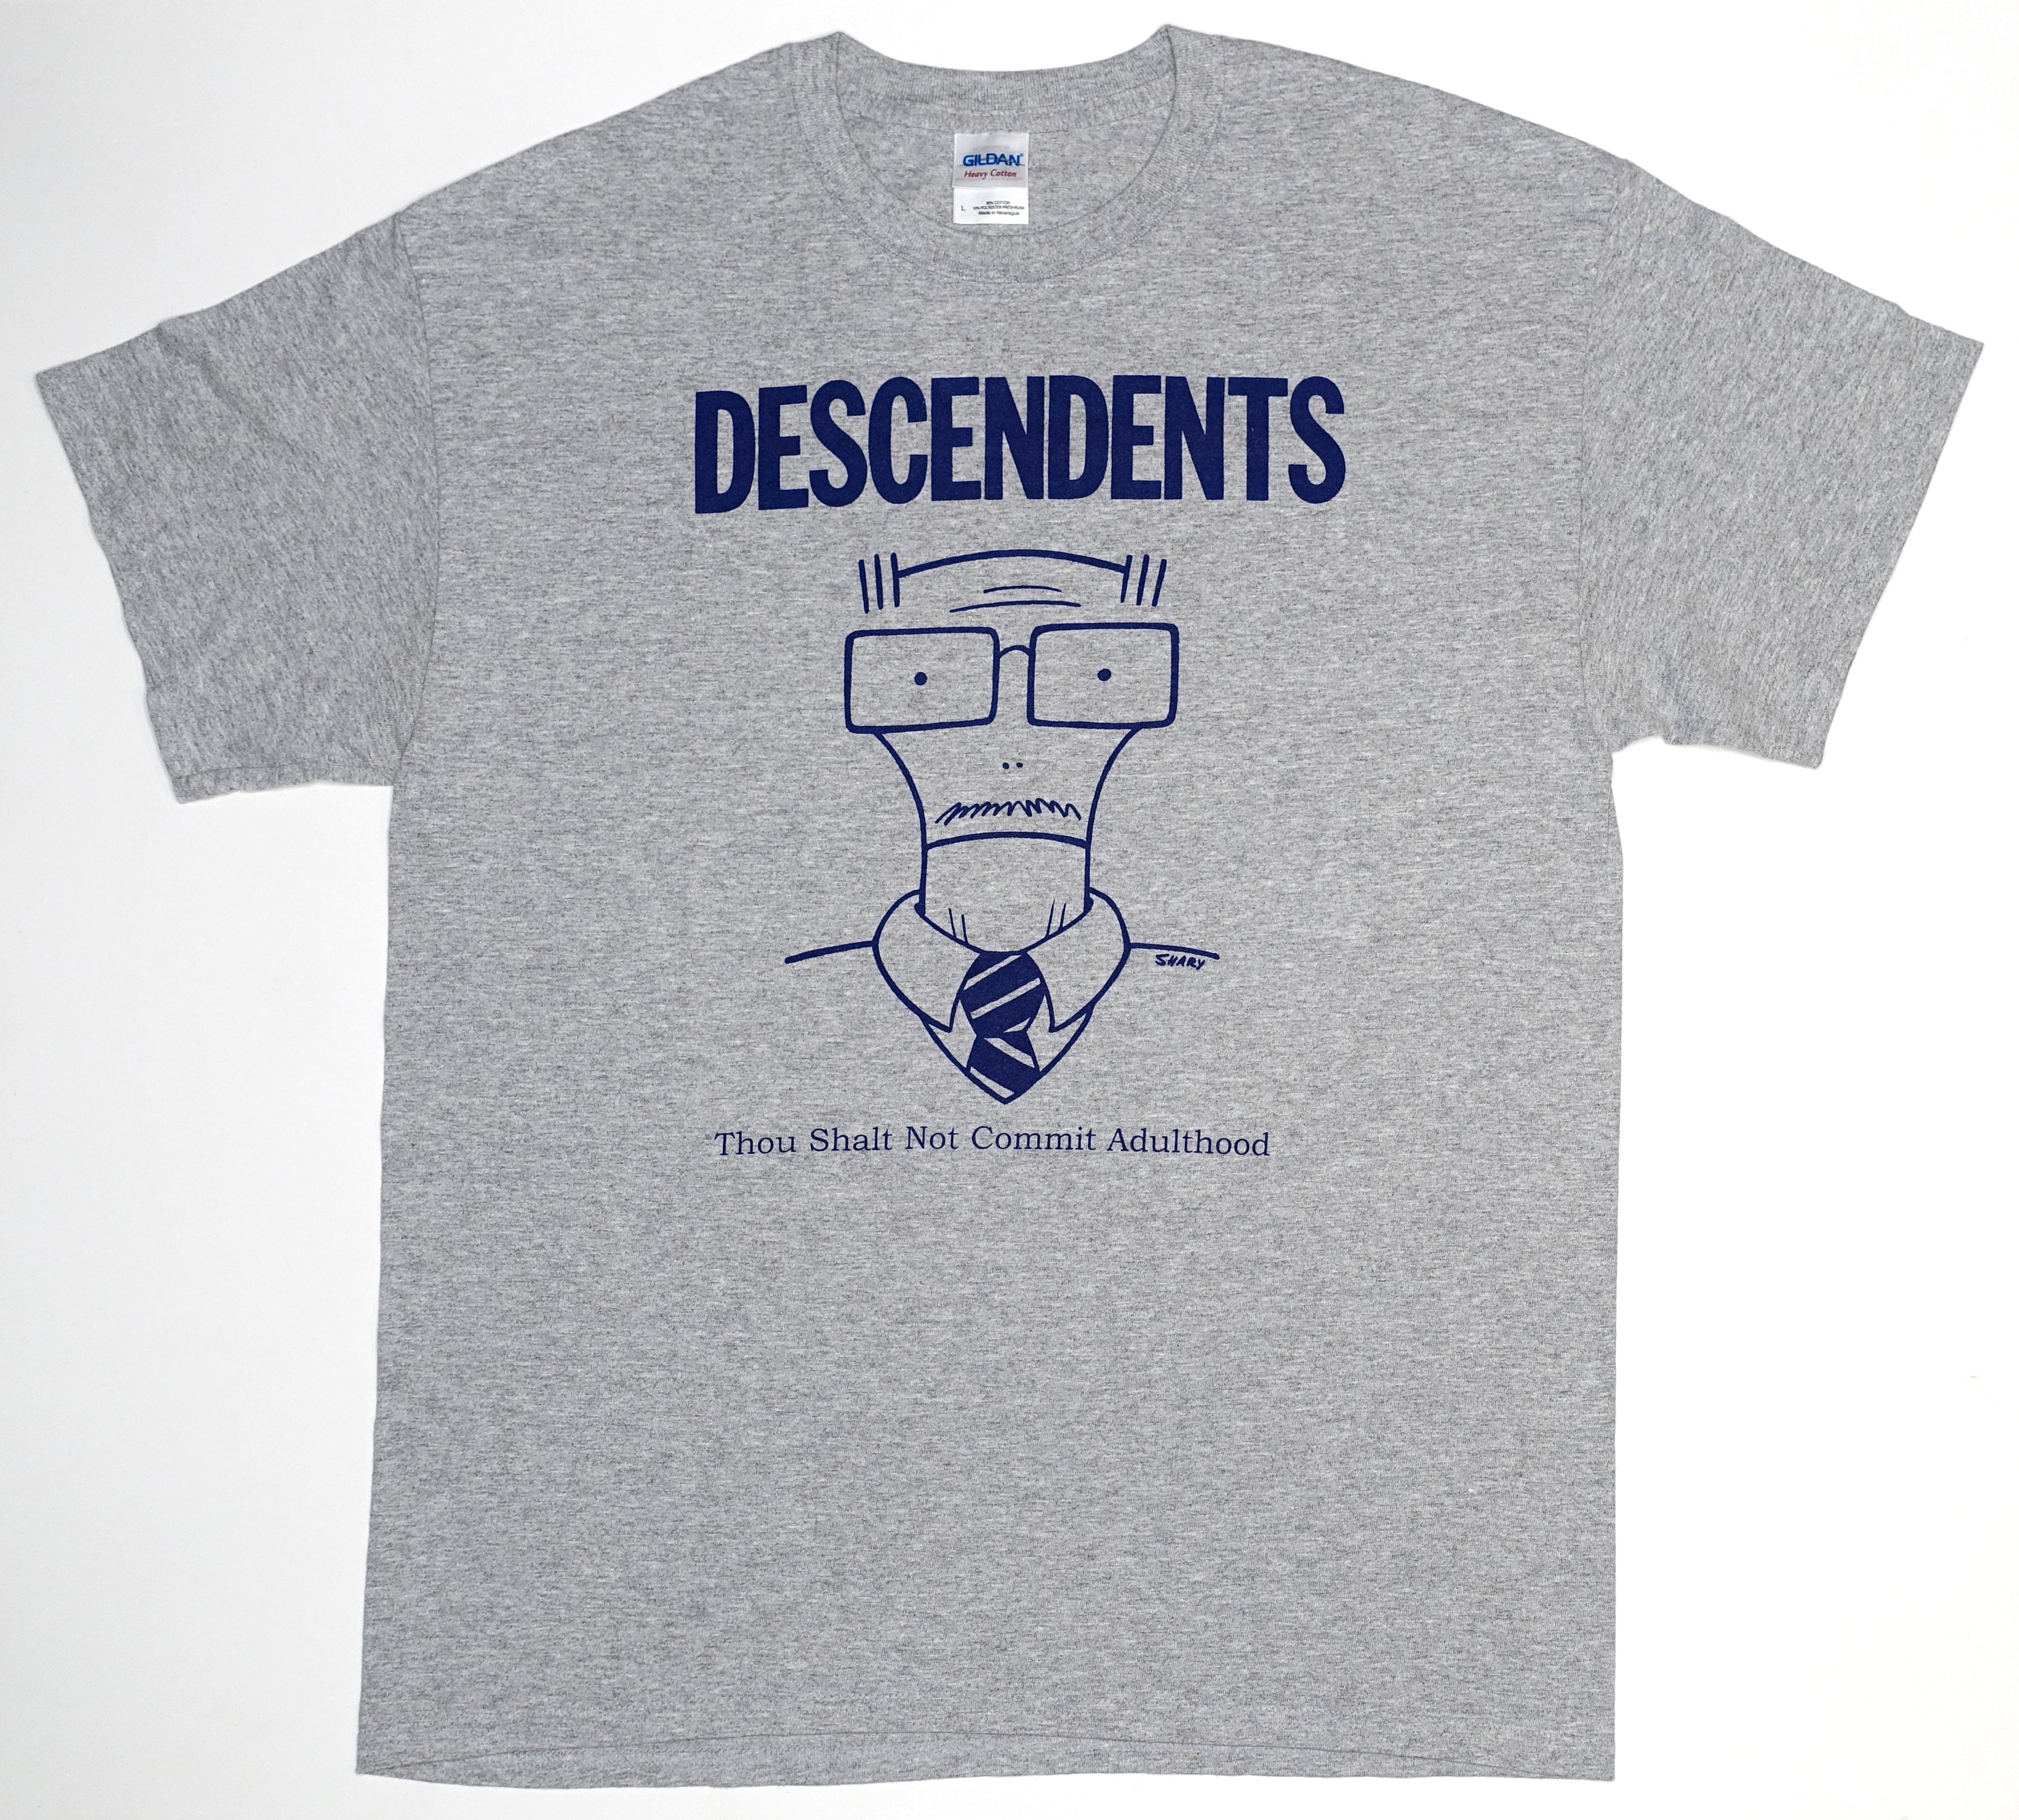 Descendents - Thou Shalt Not Commit Adulthood Tour Shirt Size Large